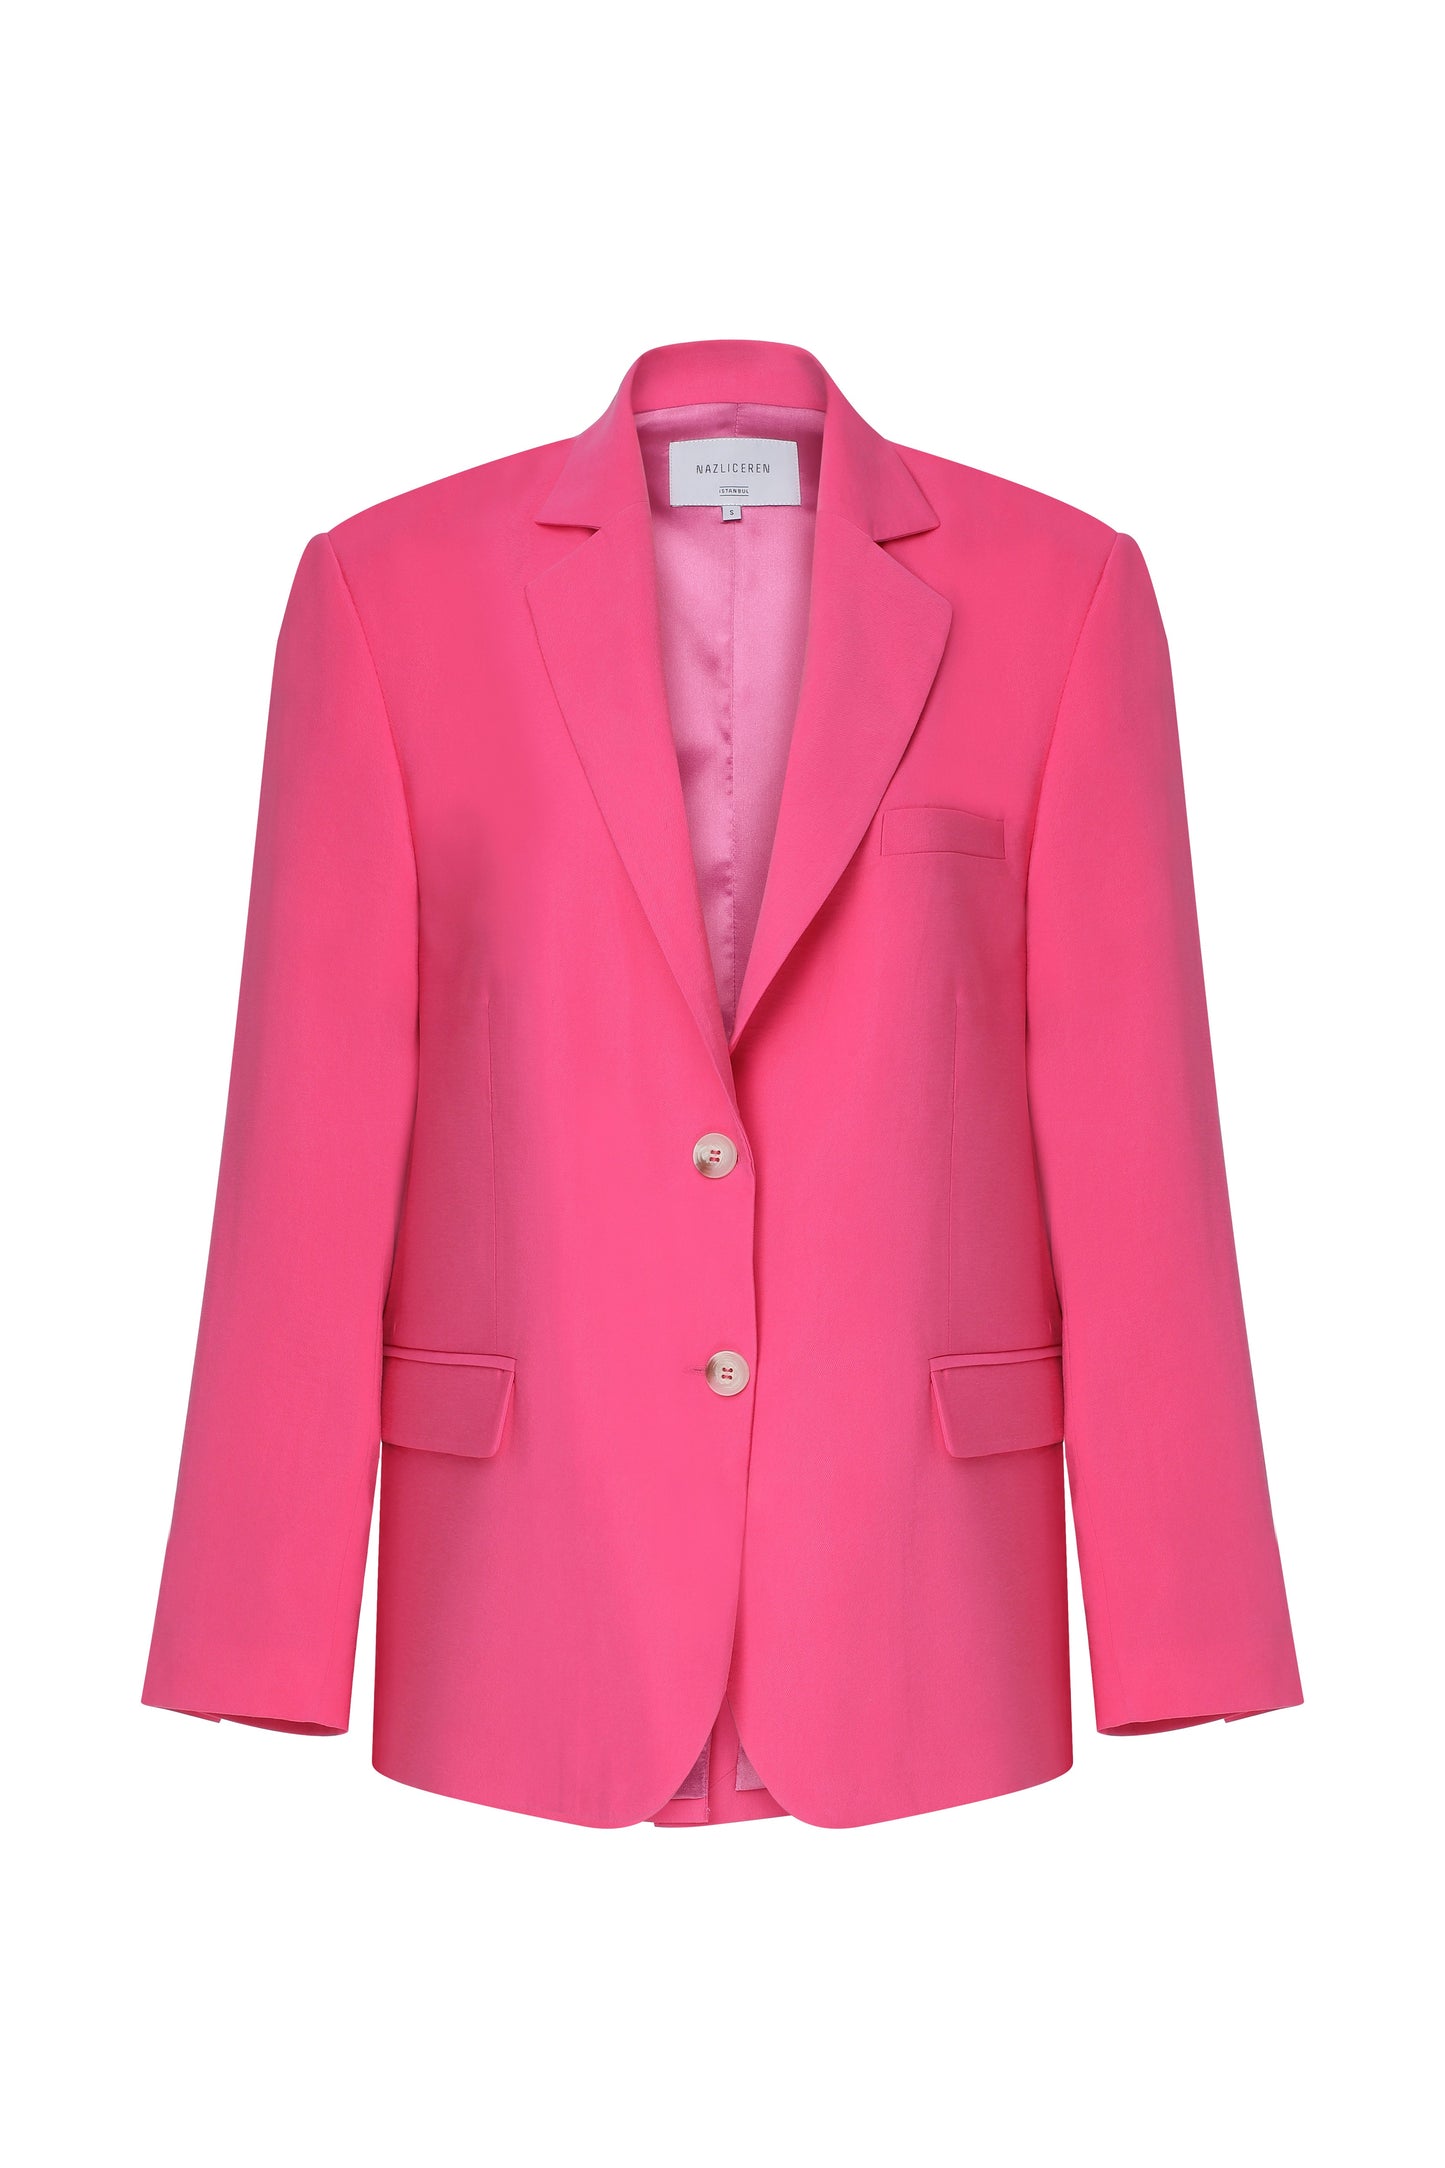 Boxy Oversized Jacket in Bubble Gum Pink